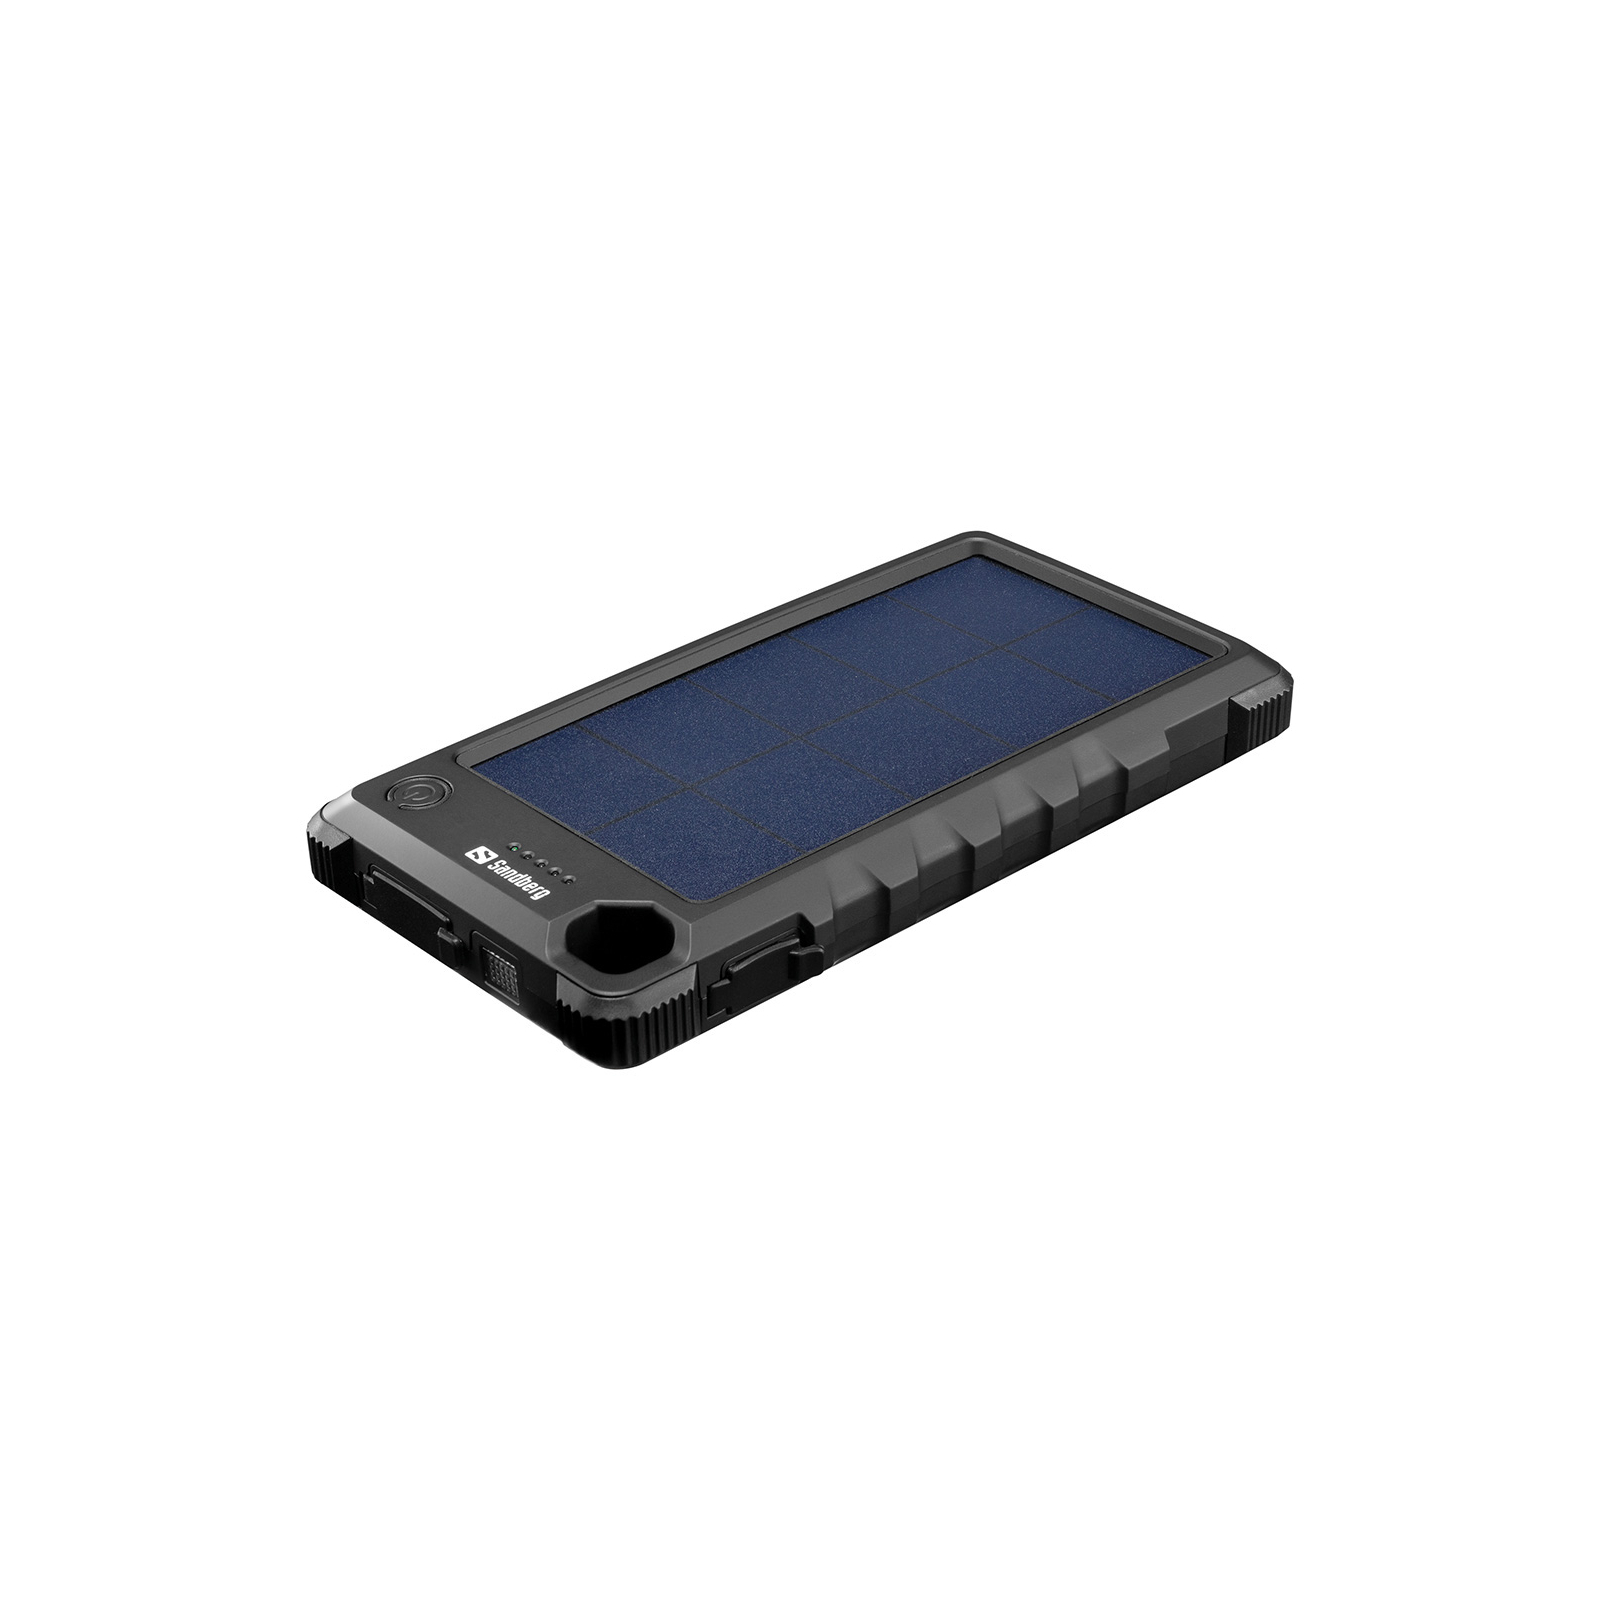 Батарея универсальная Sandberg 10000mAh, Outdoor IP66, Solar Panel 5V/300mA, USB-C, Micro-USB, USB-A, 5V/3A Max (420-53)